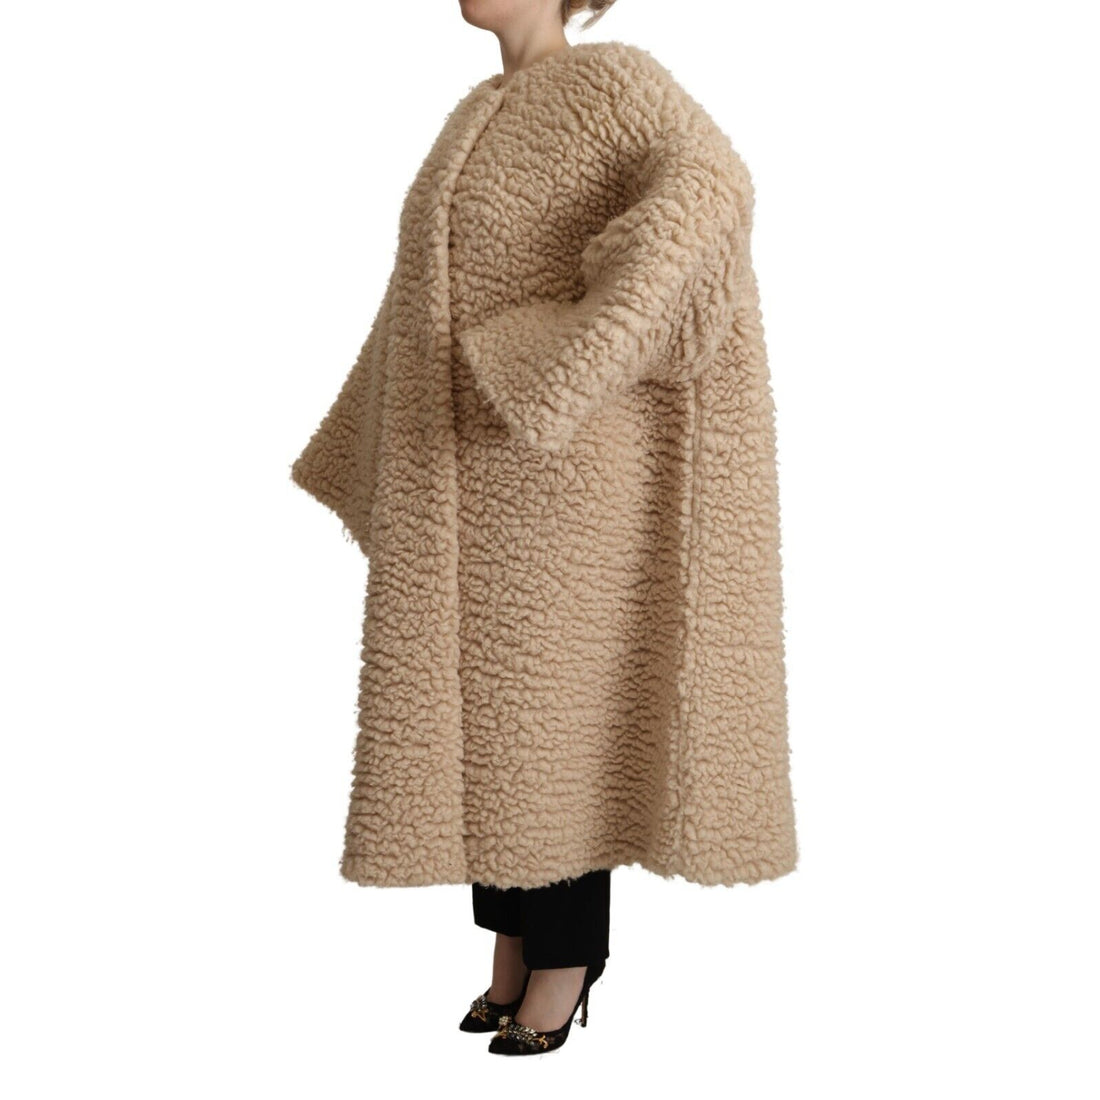 Dolce & Gabbana Elegant Beige Cashmere Overcoat Jacket